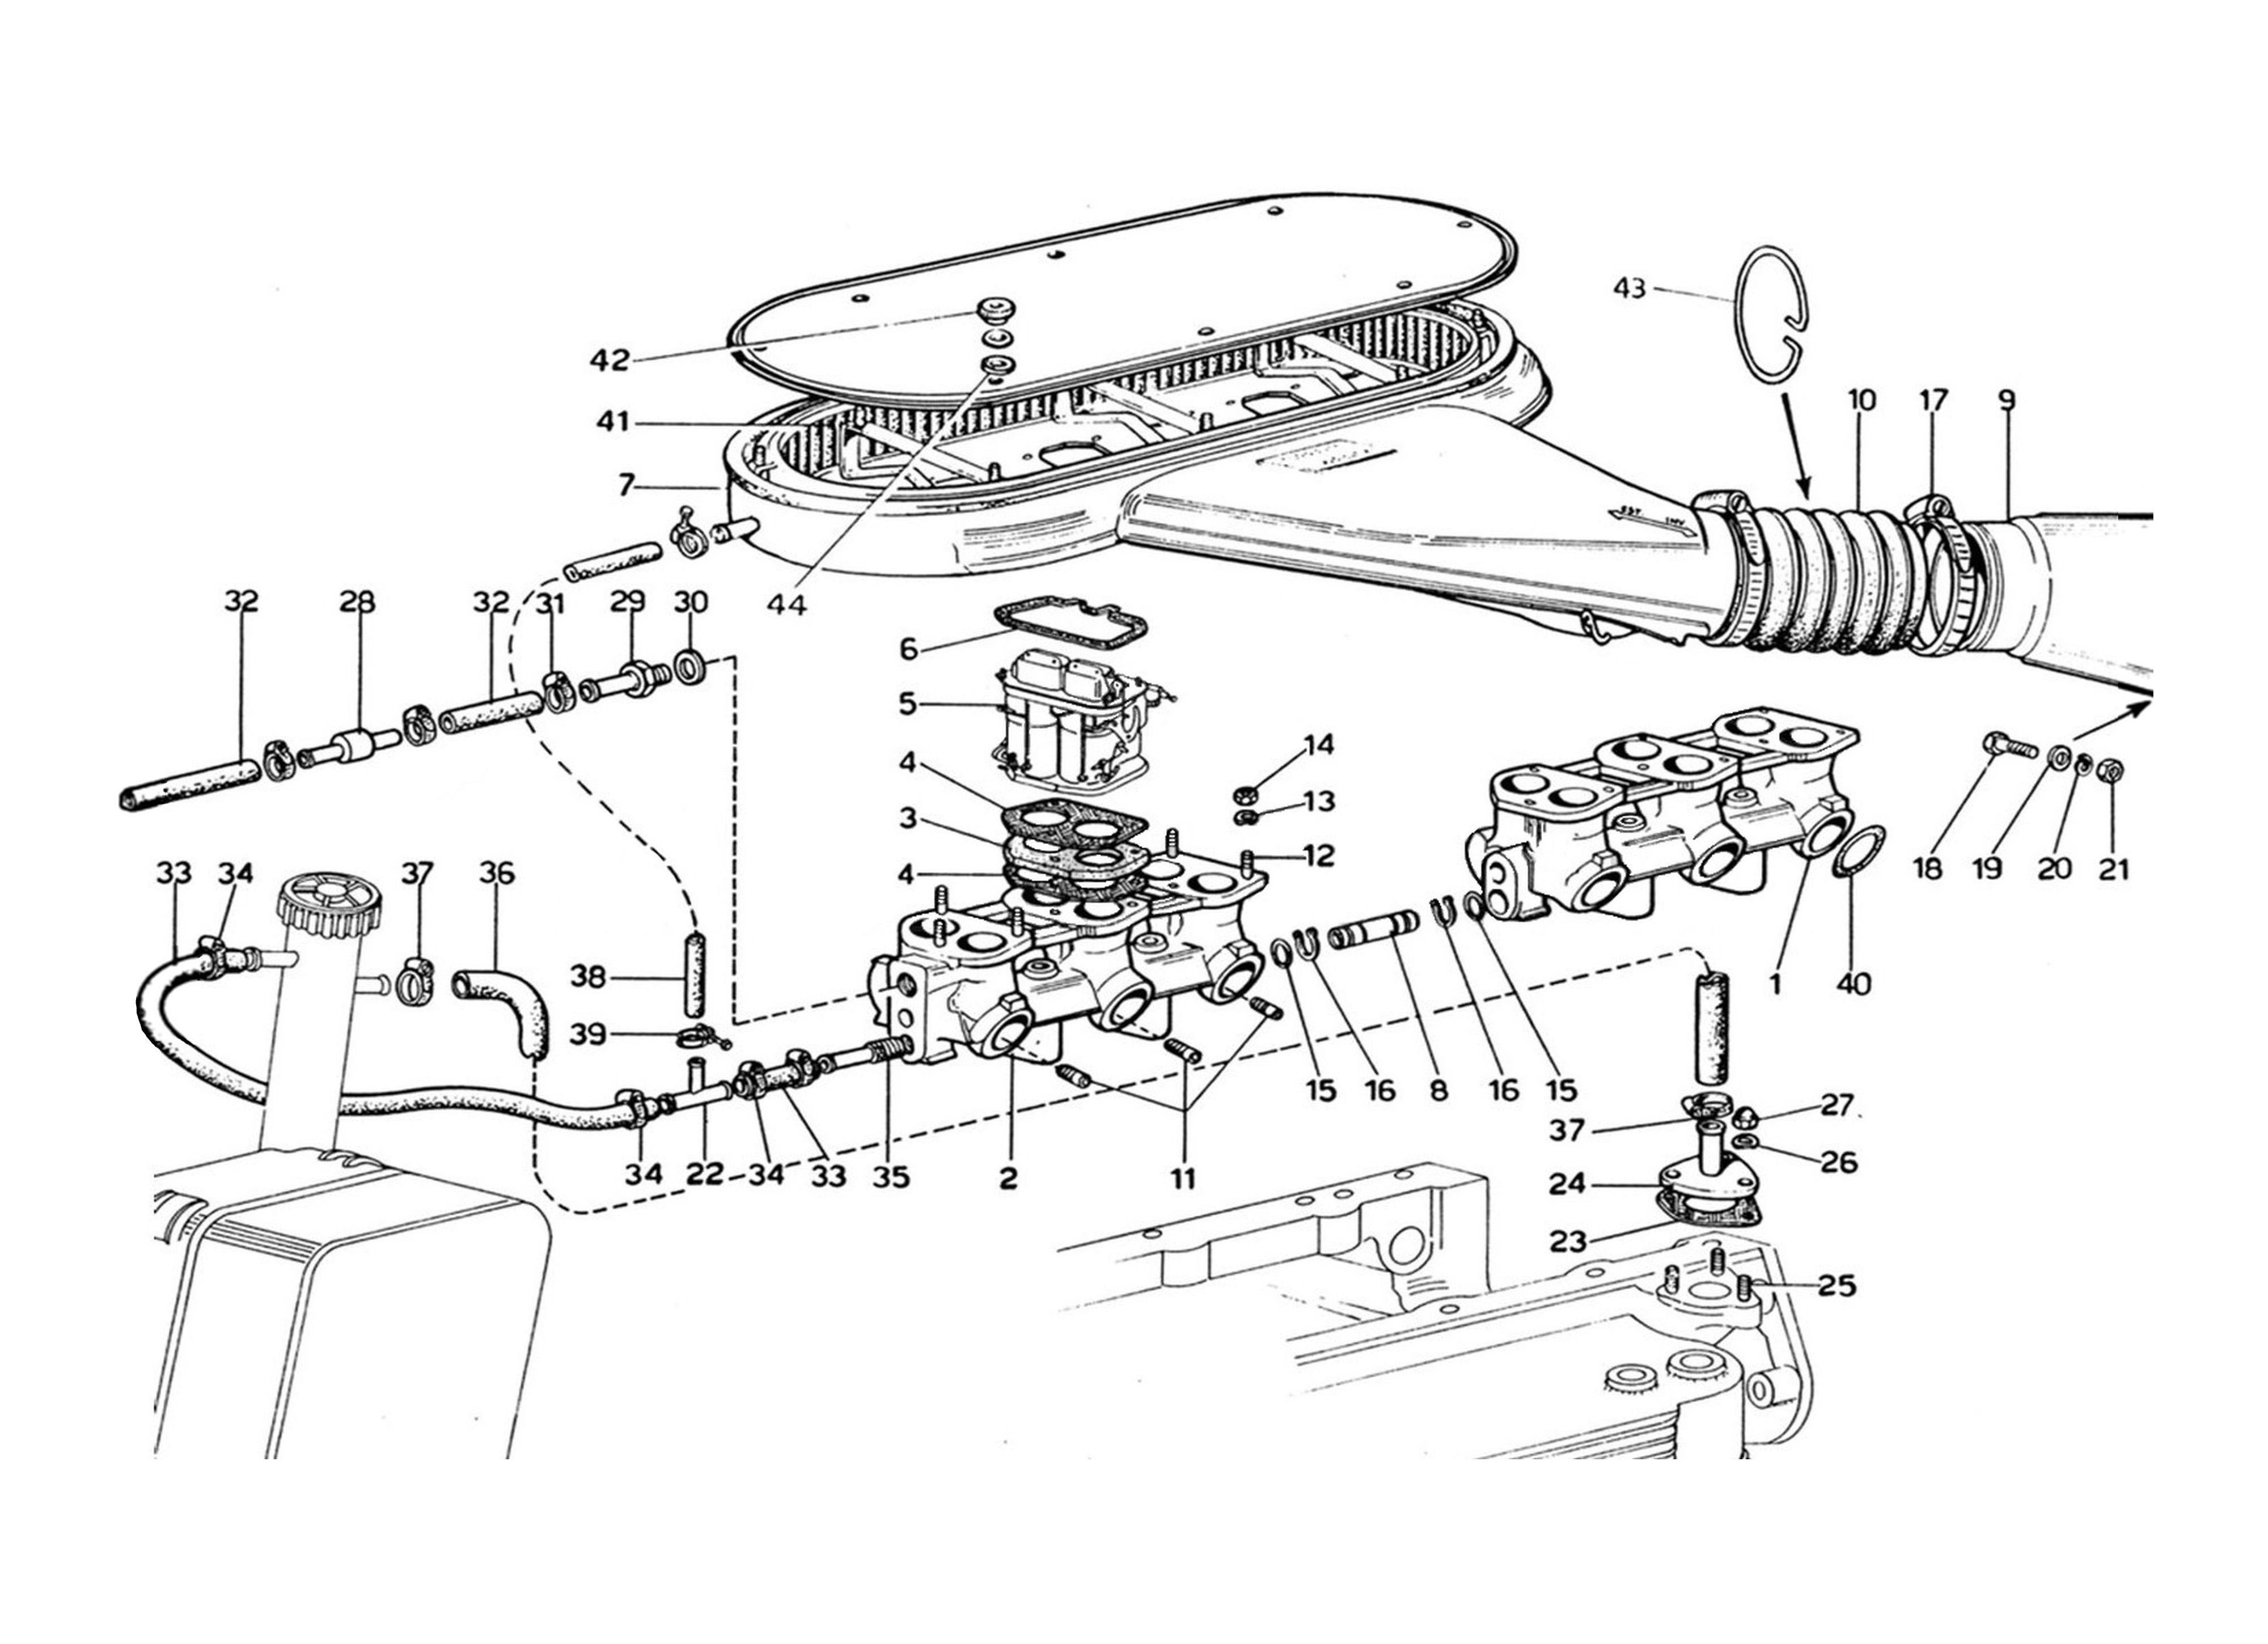 Schematic: Intake Manifolds - Air Intake (1974 Revision)